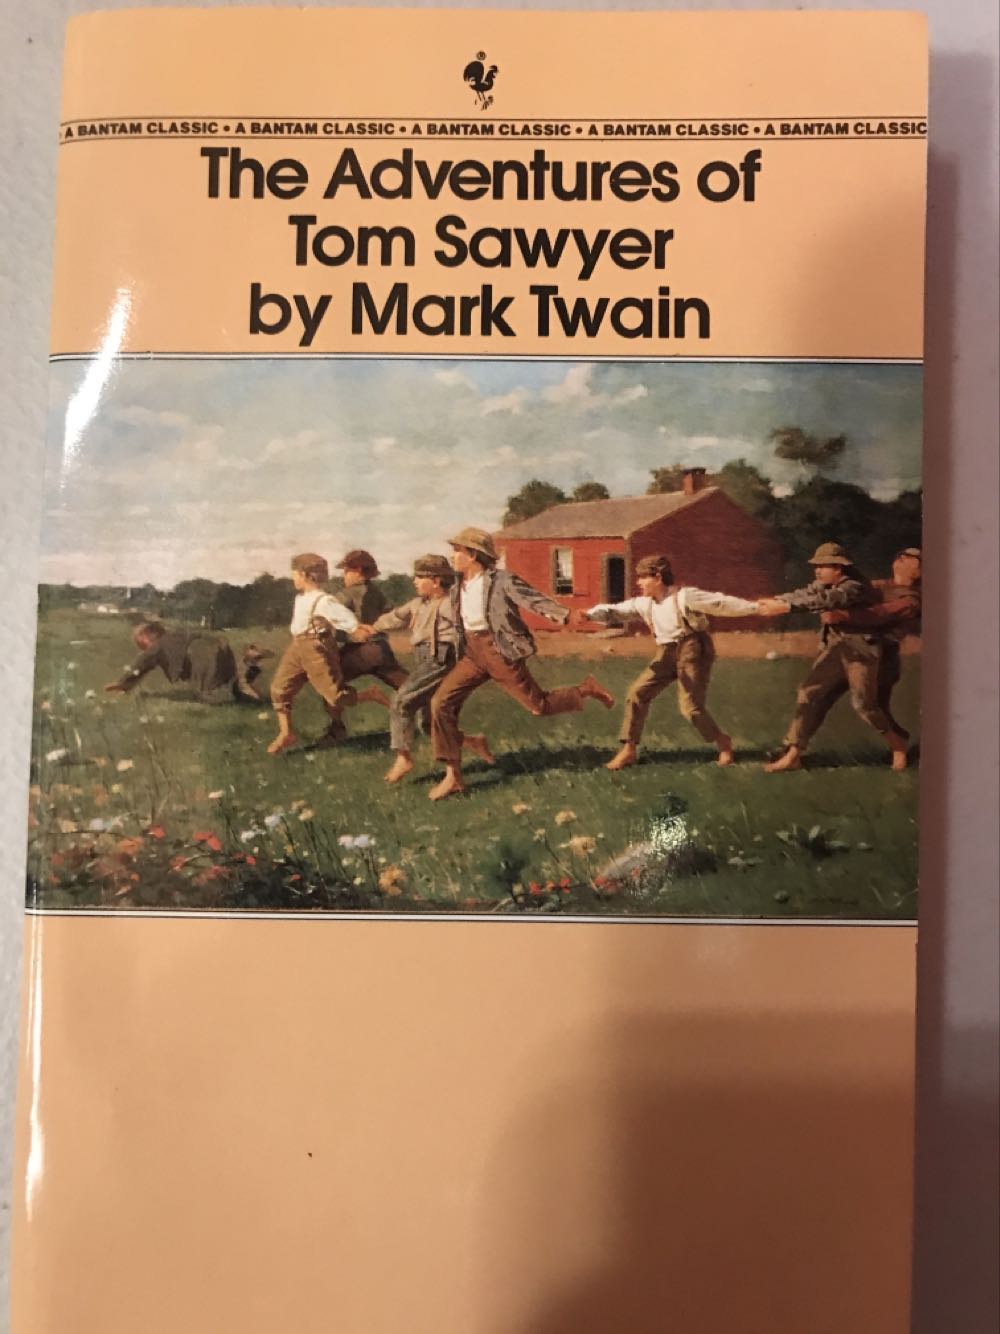 The Adventures of Tom Sawyer - Mark Twain (Bantam Classics - Paperback) book collectible [Barcode 9780553211283] - Main Image 3